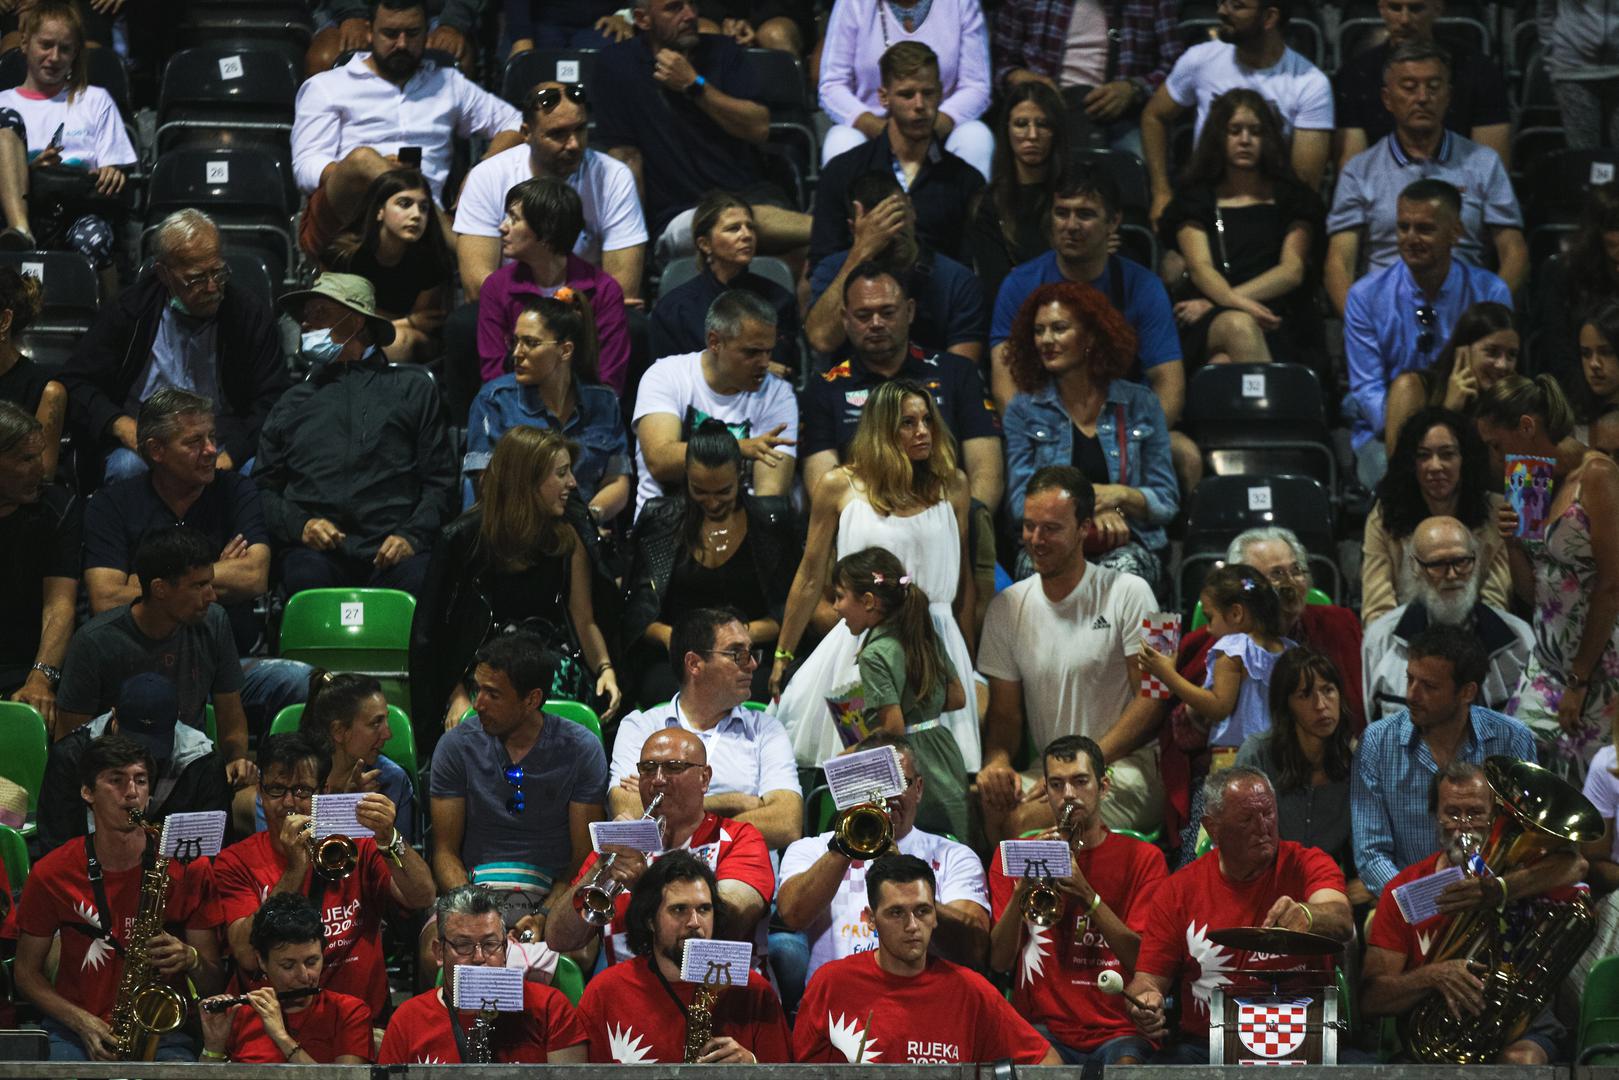 20.06.2020., Zadar - Teniski turnir Adria Tour. Novak Djokovic i Borna Coric.   Photo: Marko Dimic/PIXSELL